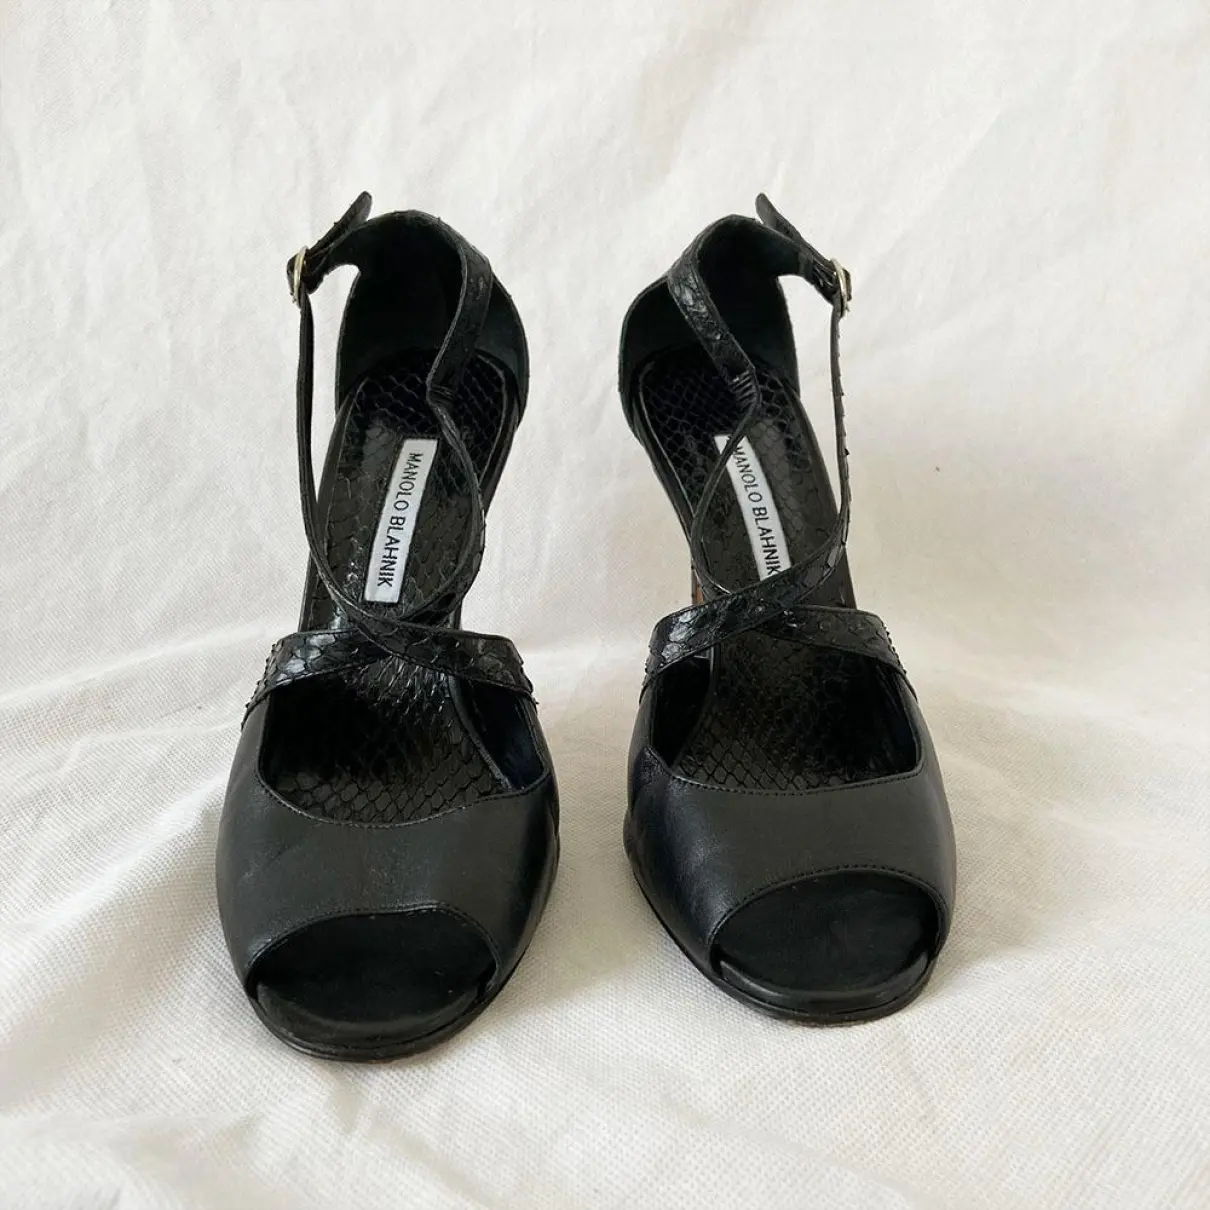 Buy Manolo Blahnik Leather sandals online